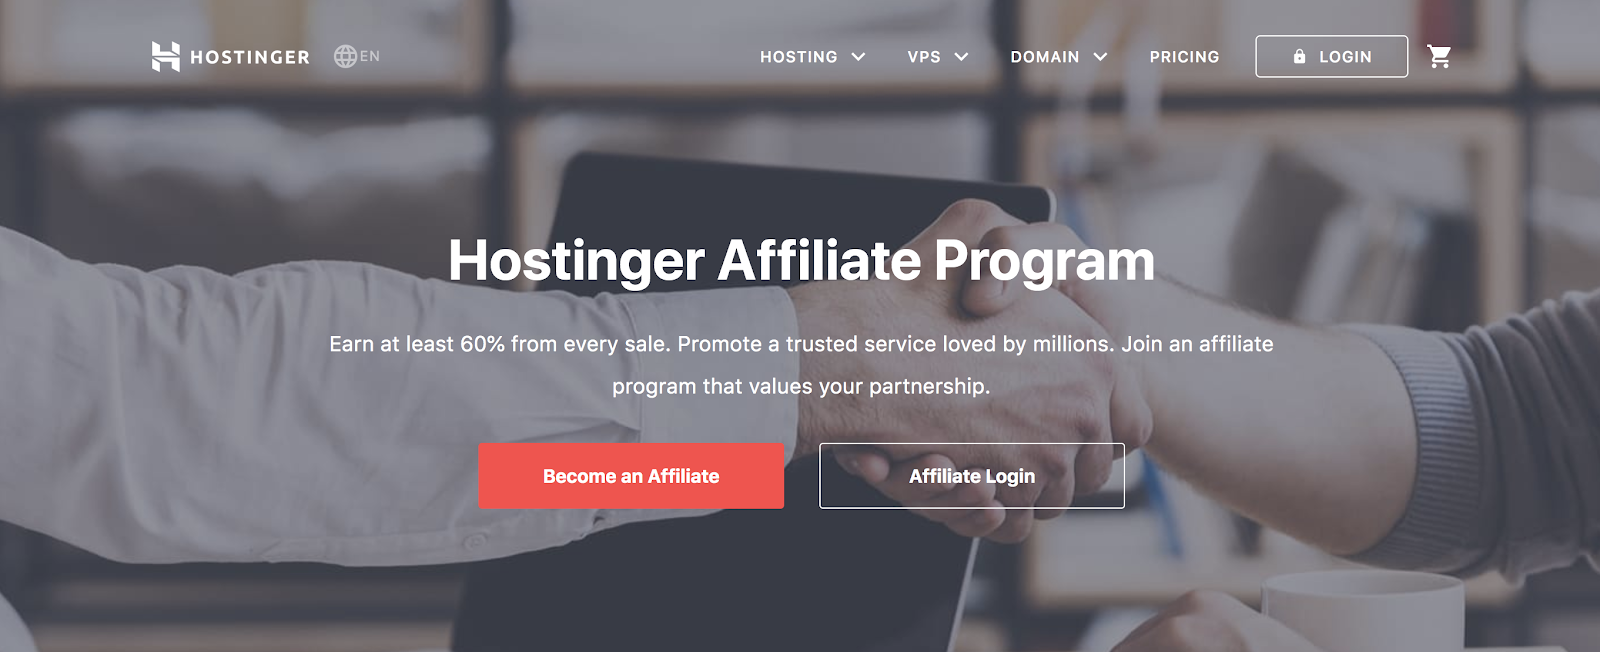 Honstinger's Affiliate Program Web Page Explainer (Screenshot)